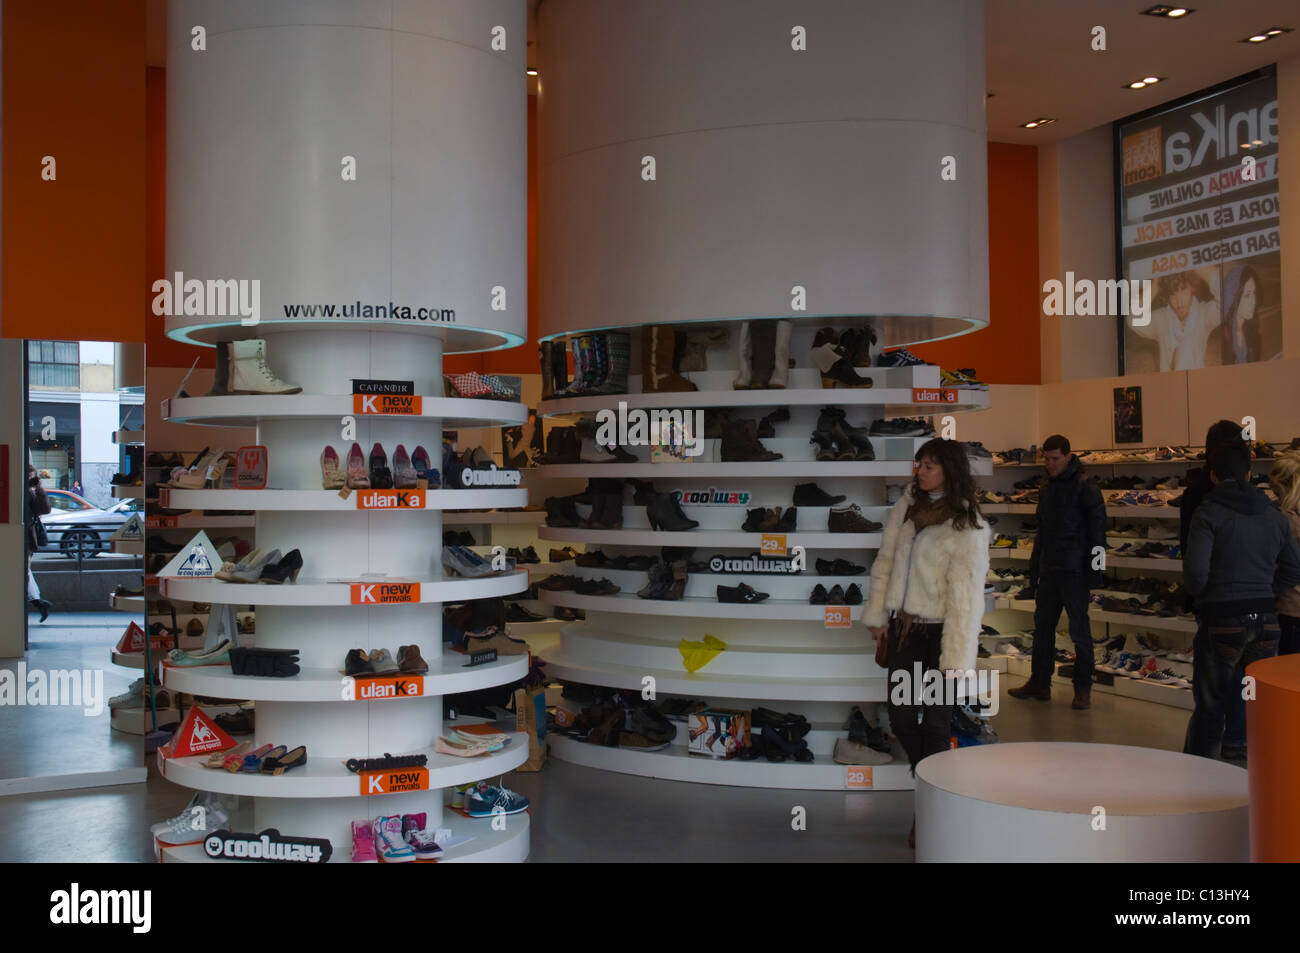 Ulanka shoe shop Plaza de Callao square Madrid Spain Europe Stock Photo ...